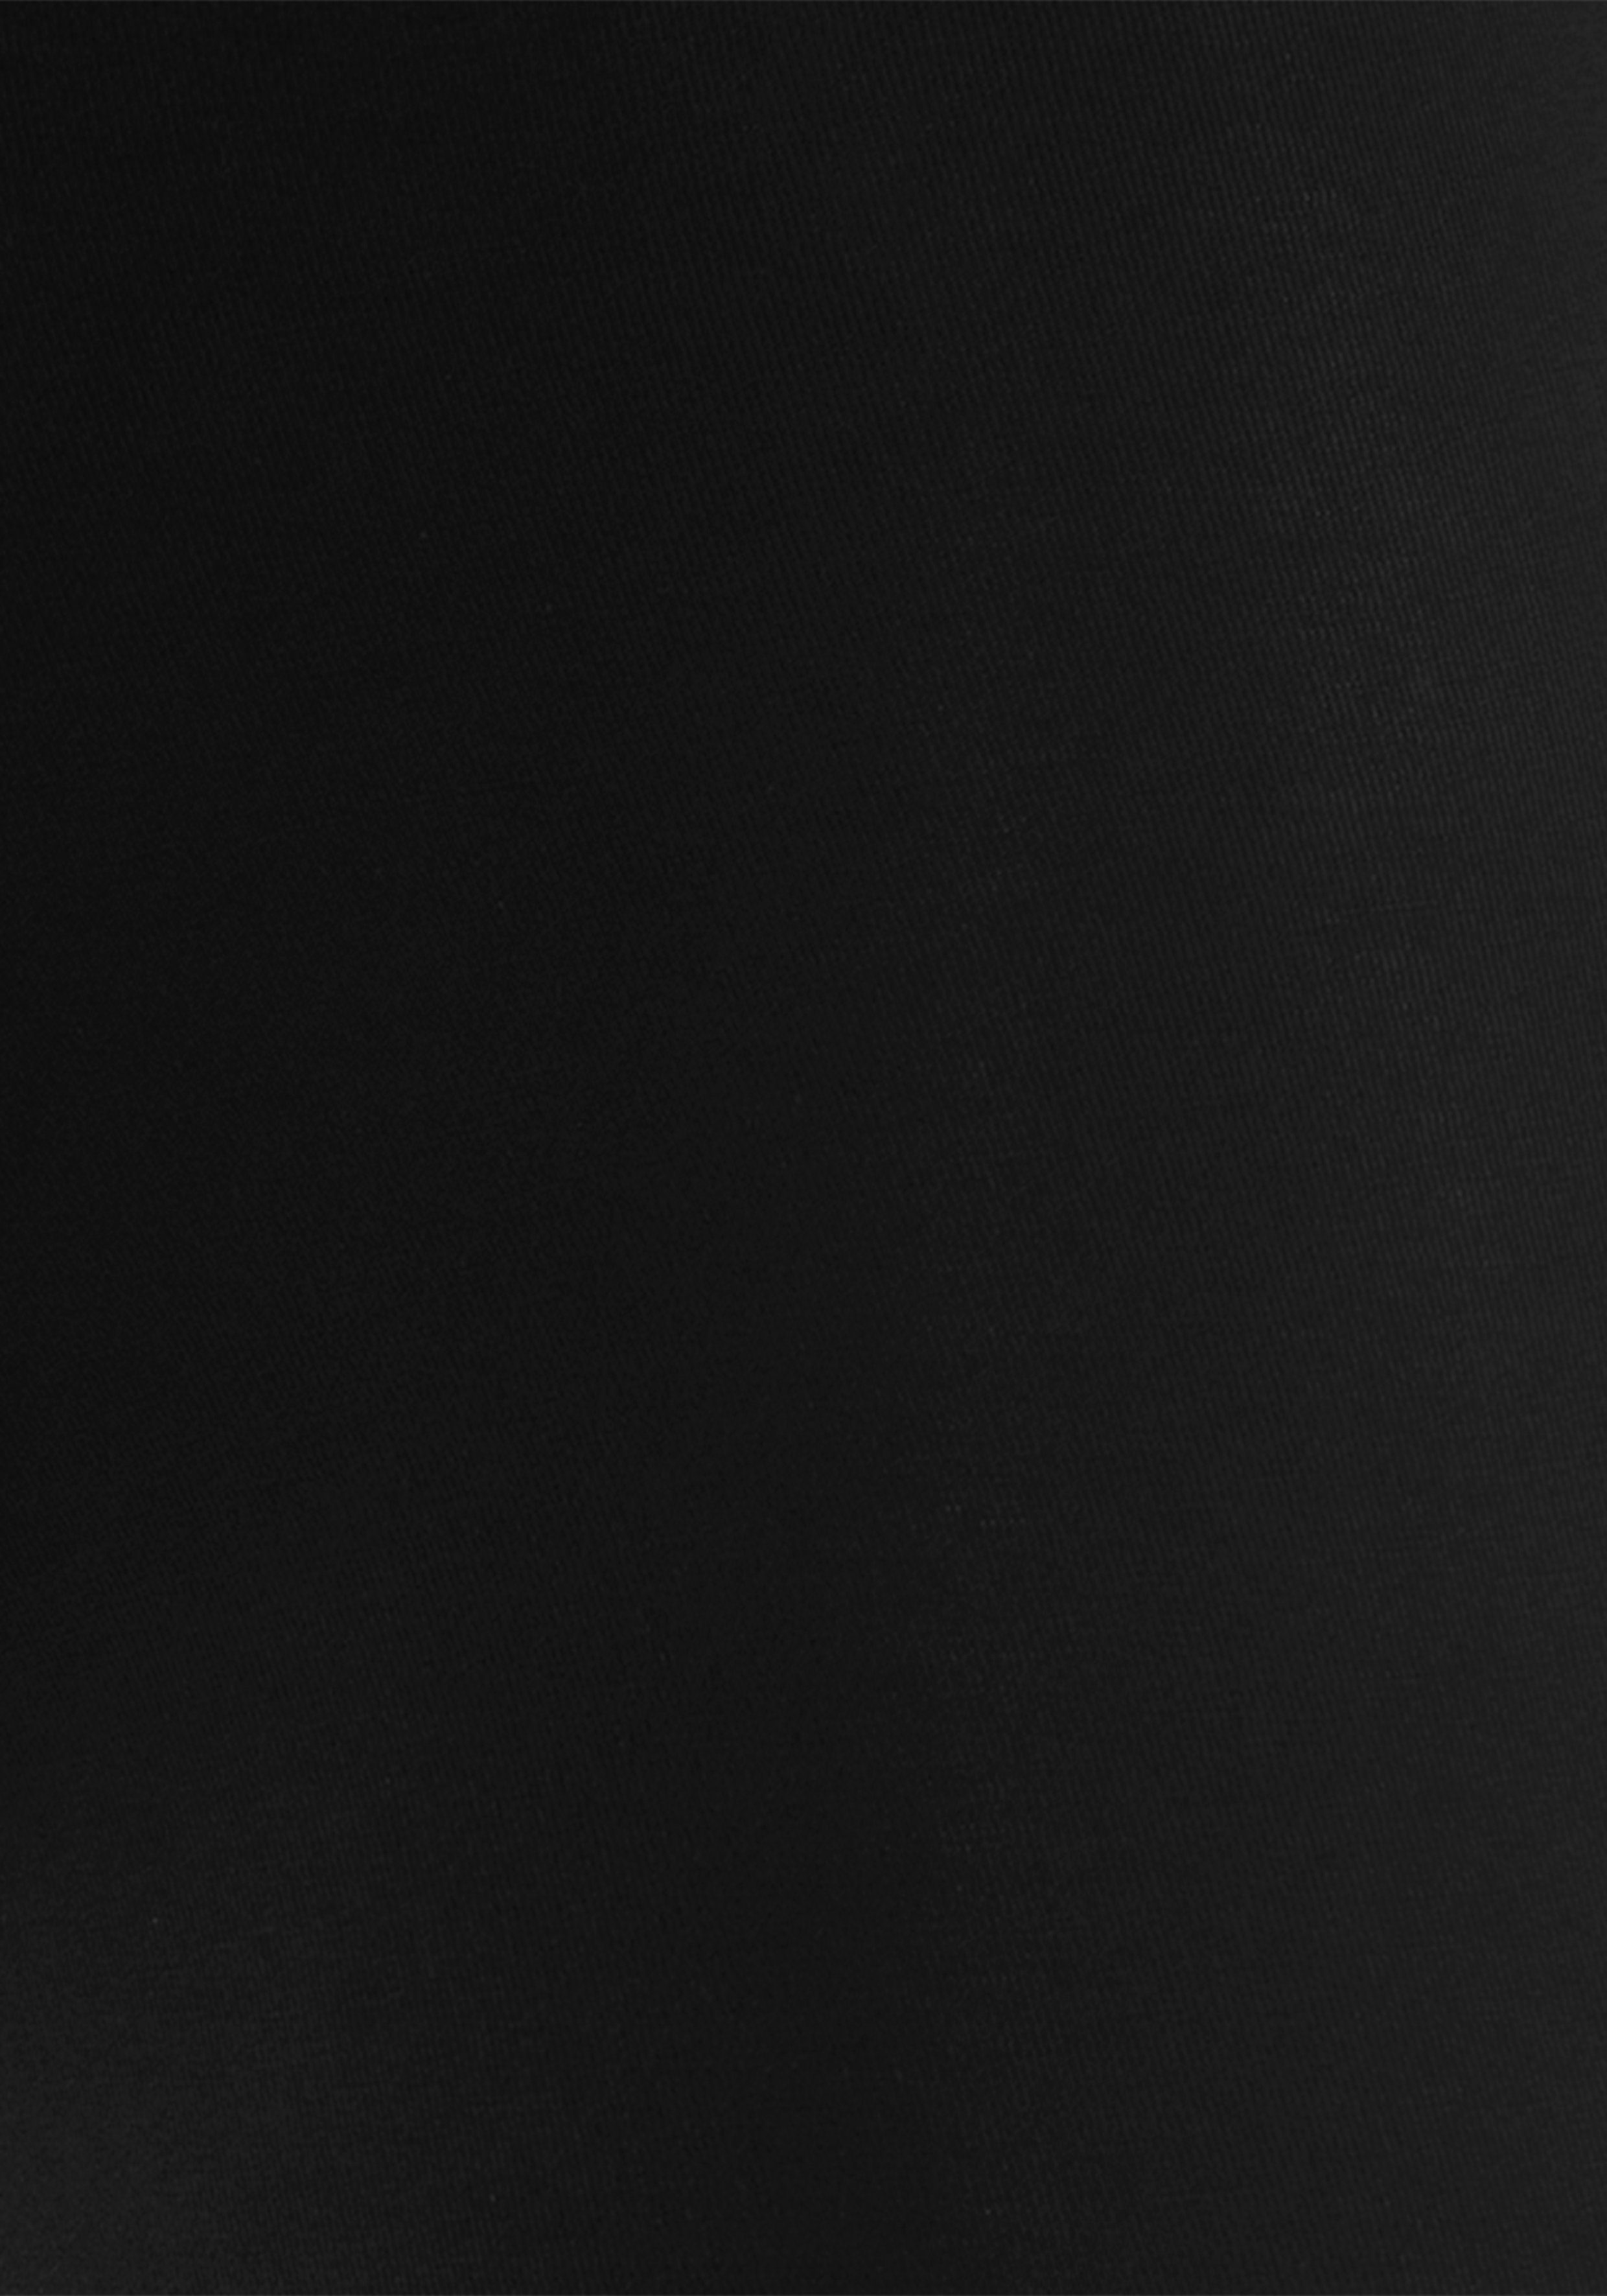 aus Lacoste atmungsaktivem (Packung, weiß, schwarz, grau-meliert Lacoste Premium 3-St., 3er-Pack) Boxershorts Herren Material eng Trunk